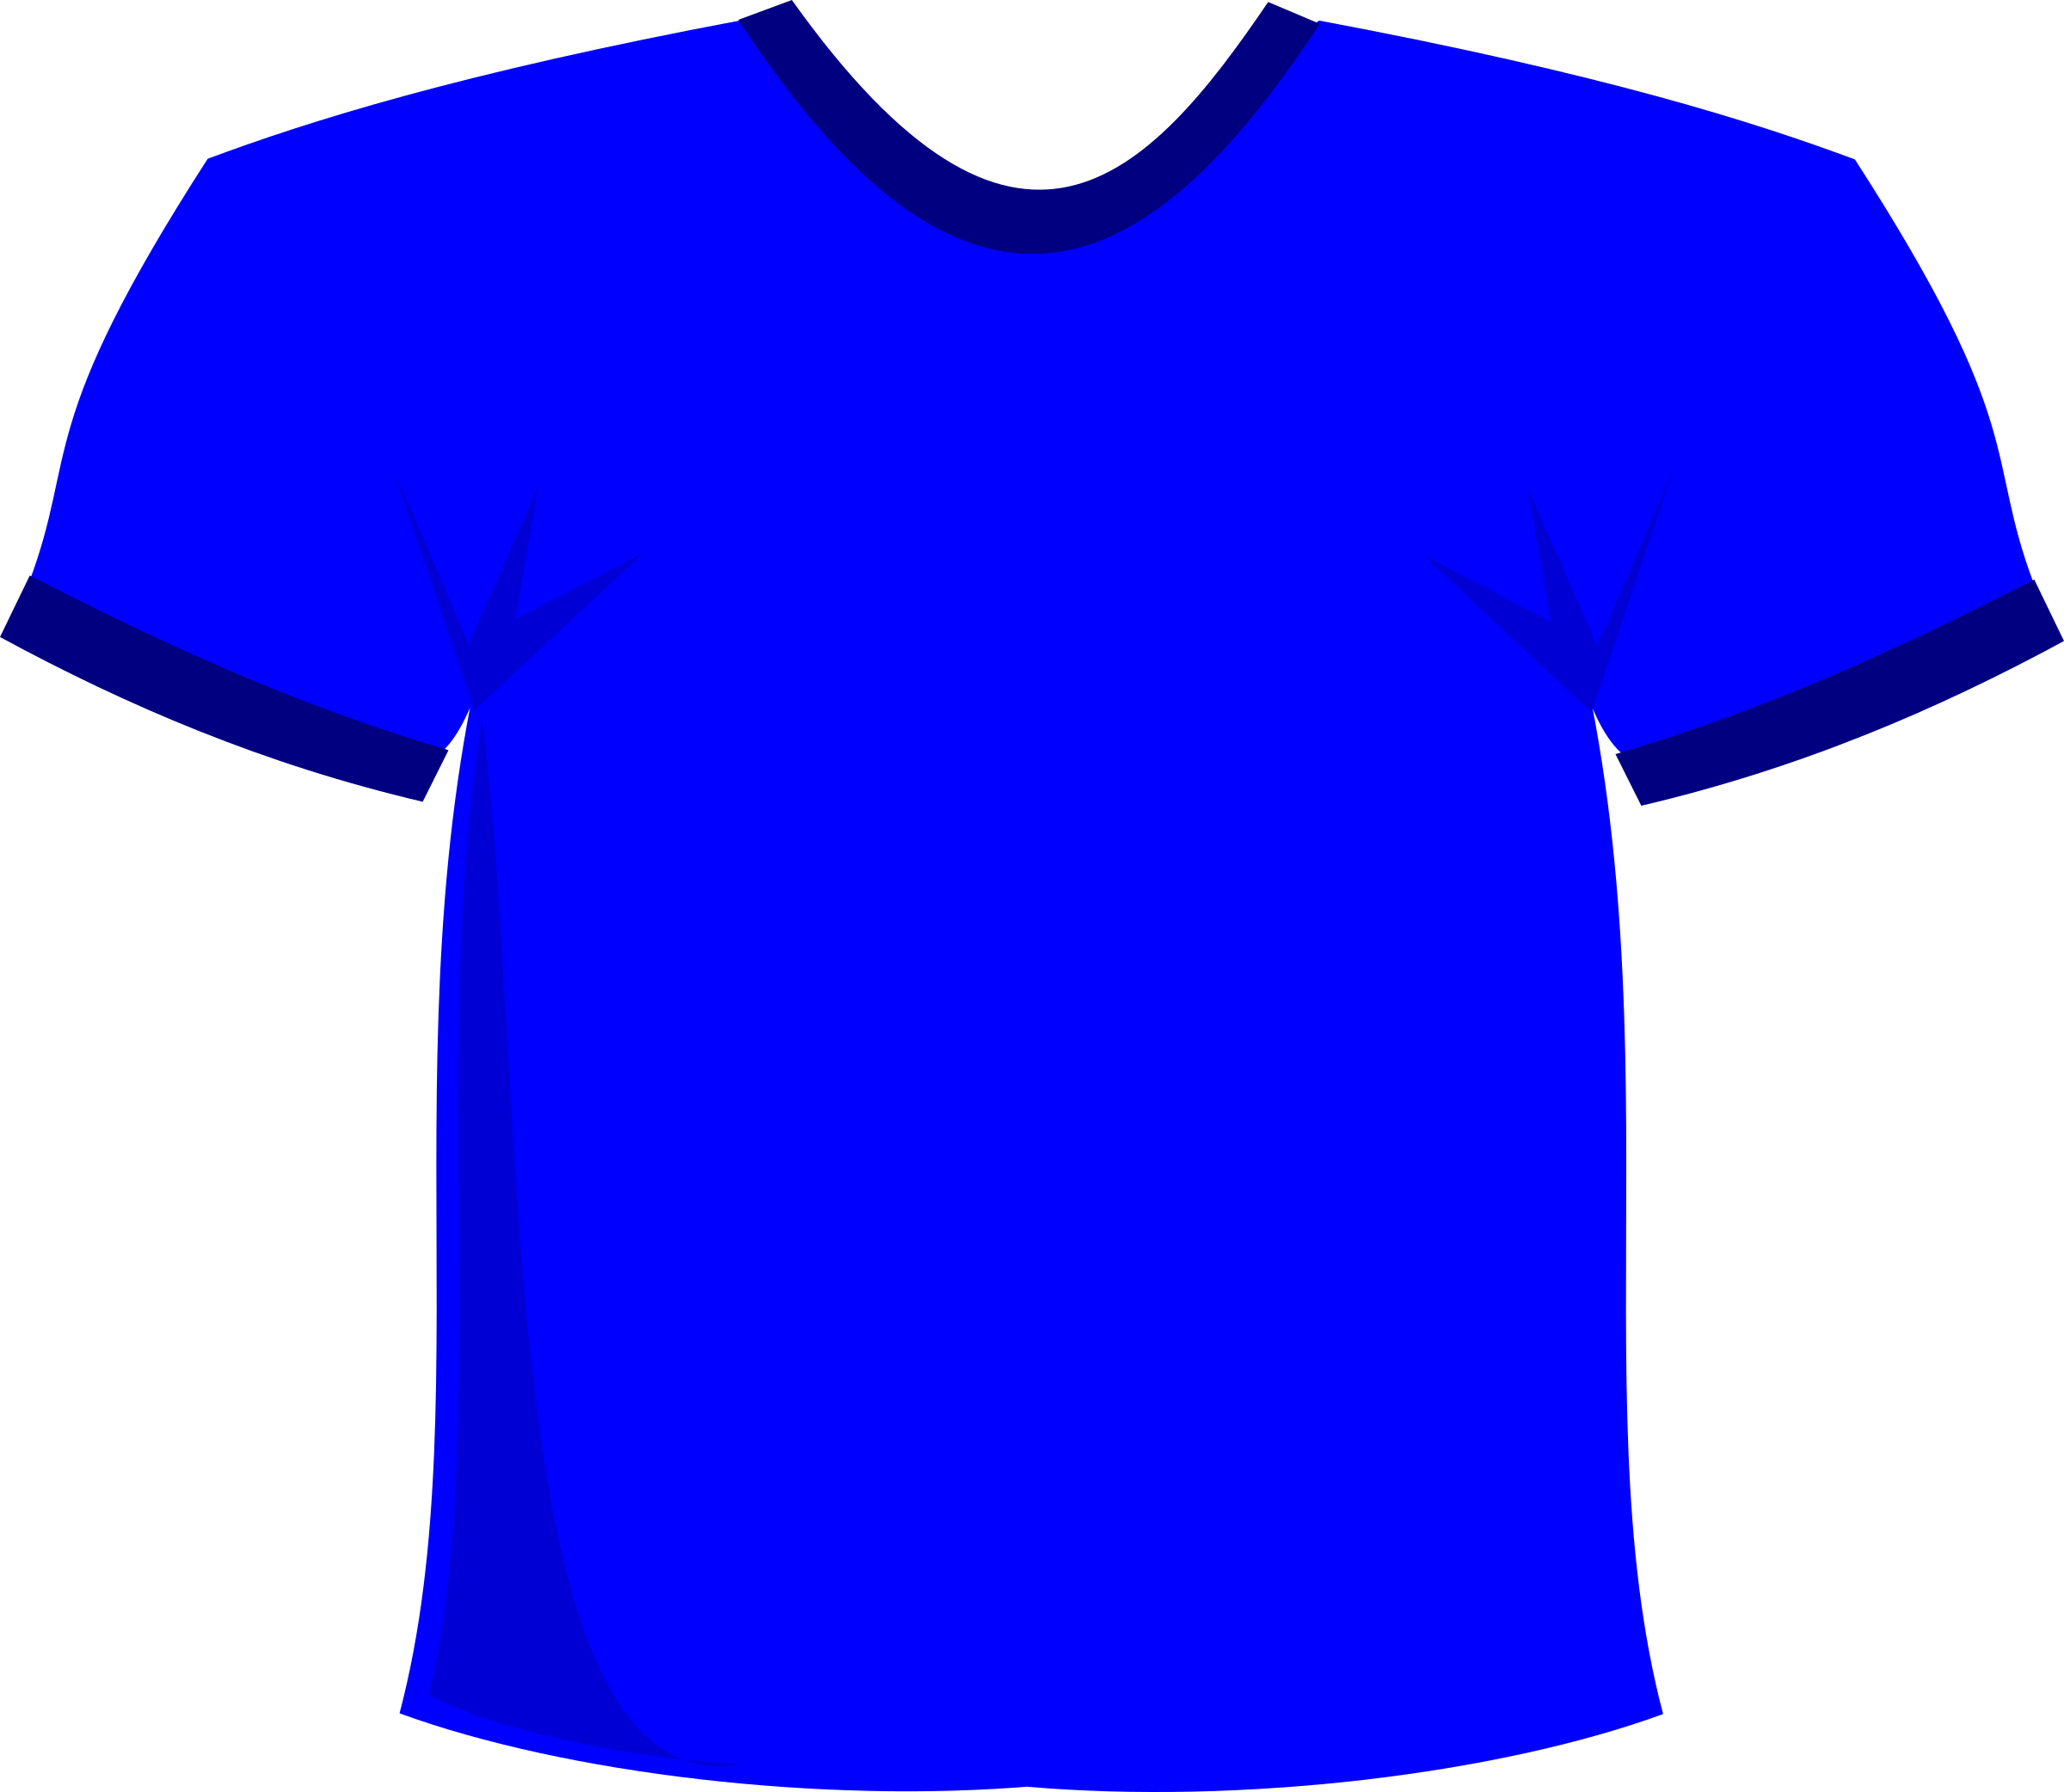 Blue Tshirt PNG Transparent Blue Tshirt.PNG Images. PlusPNG